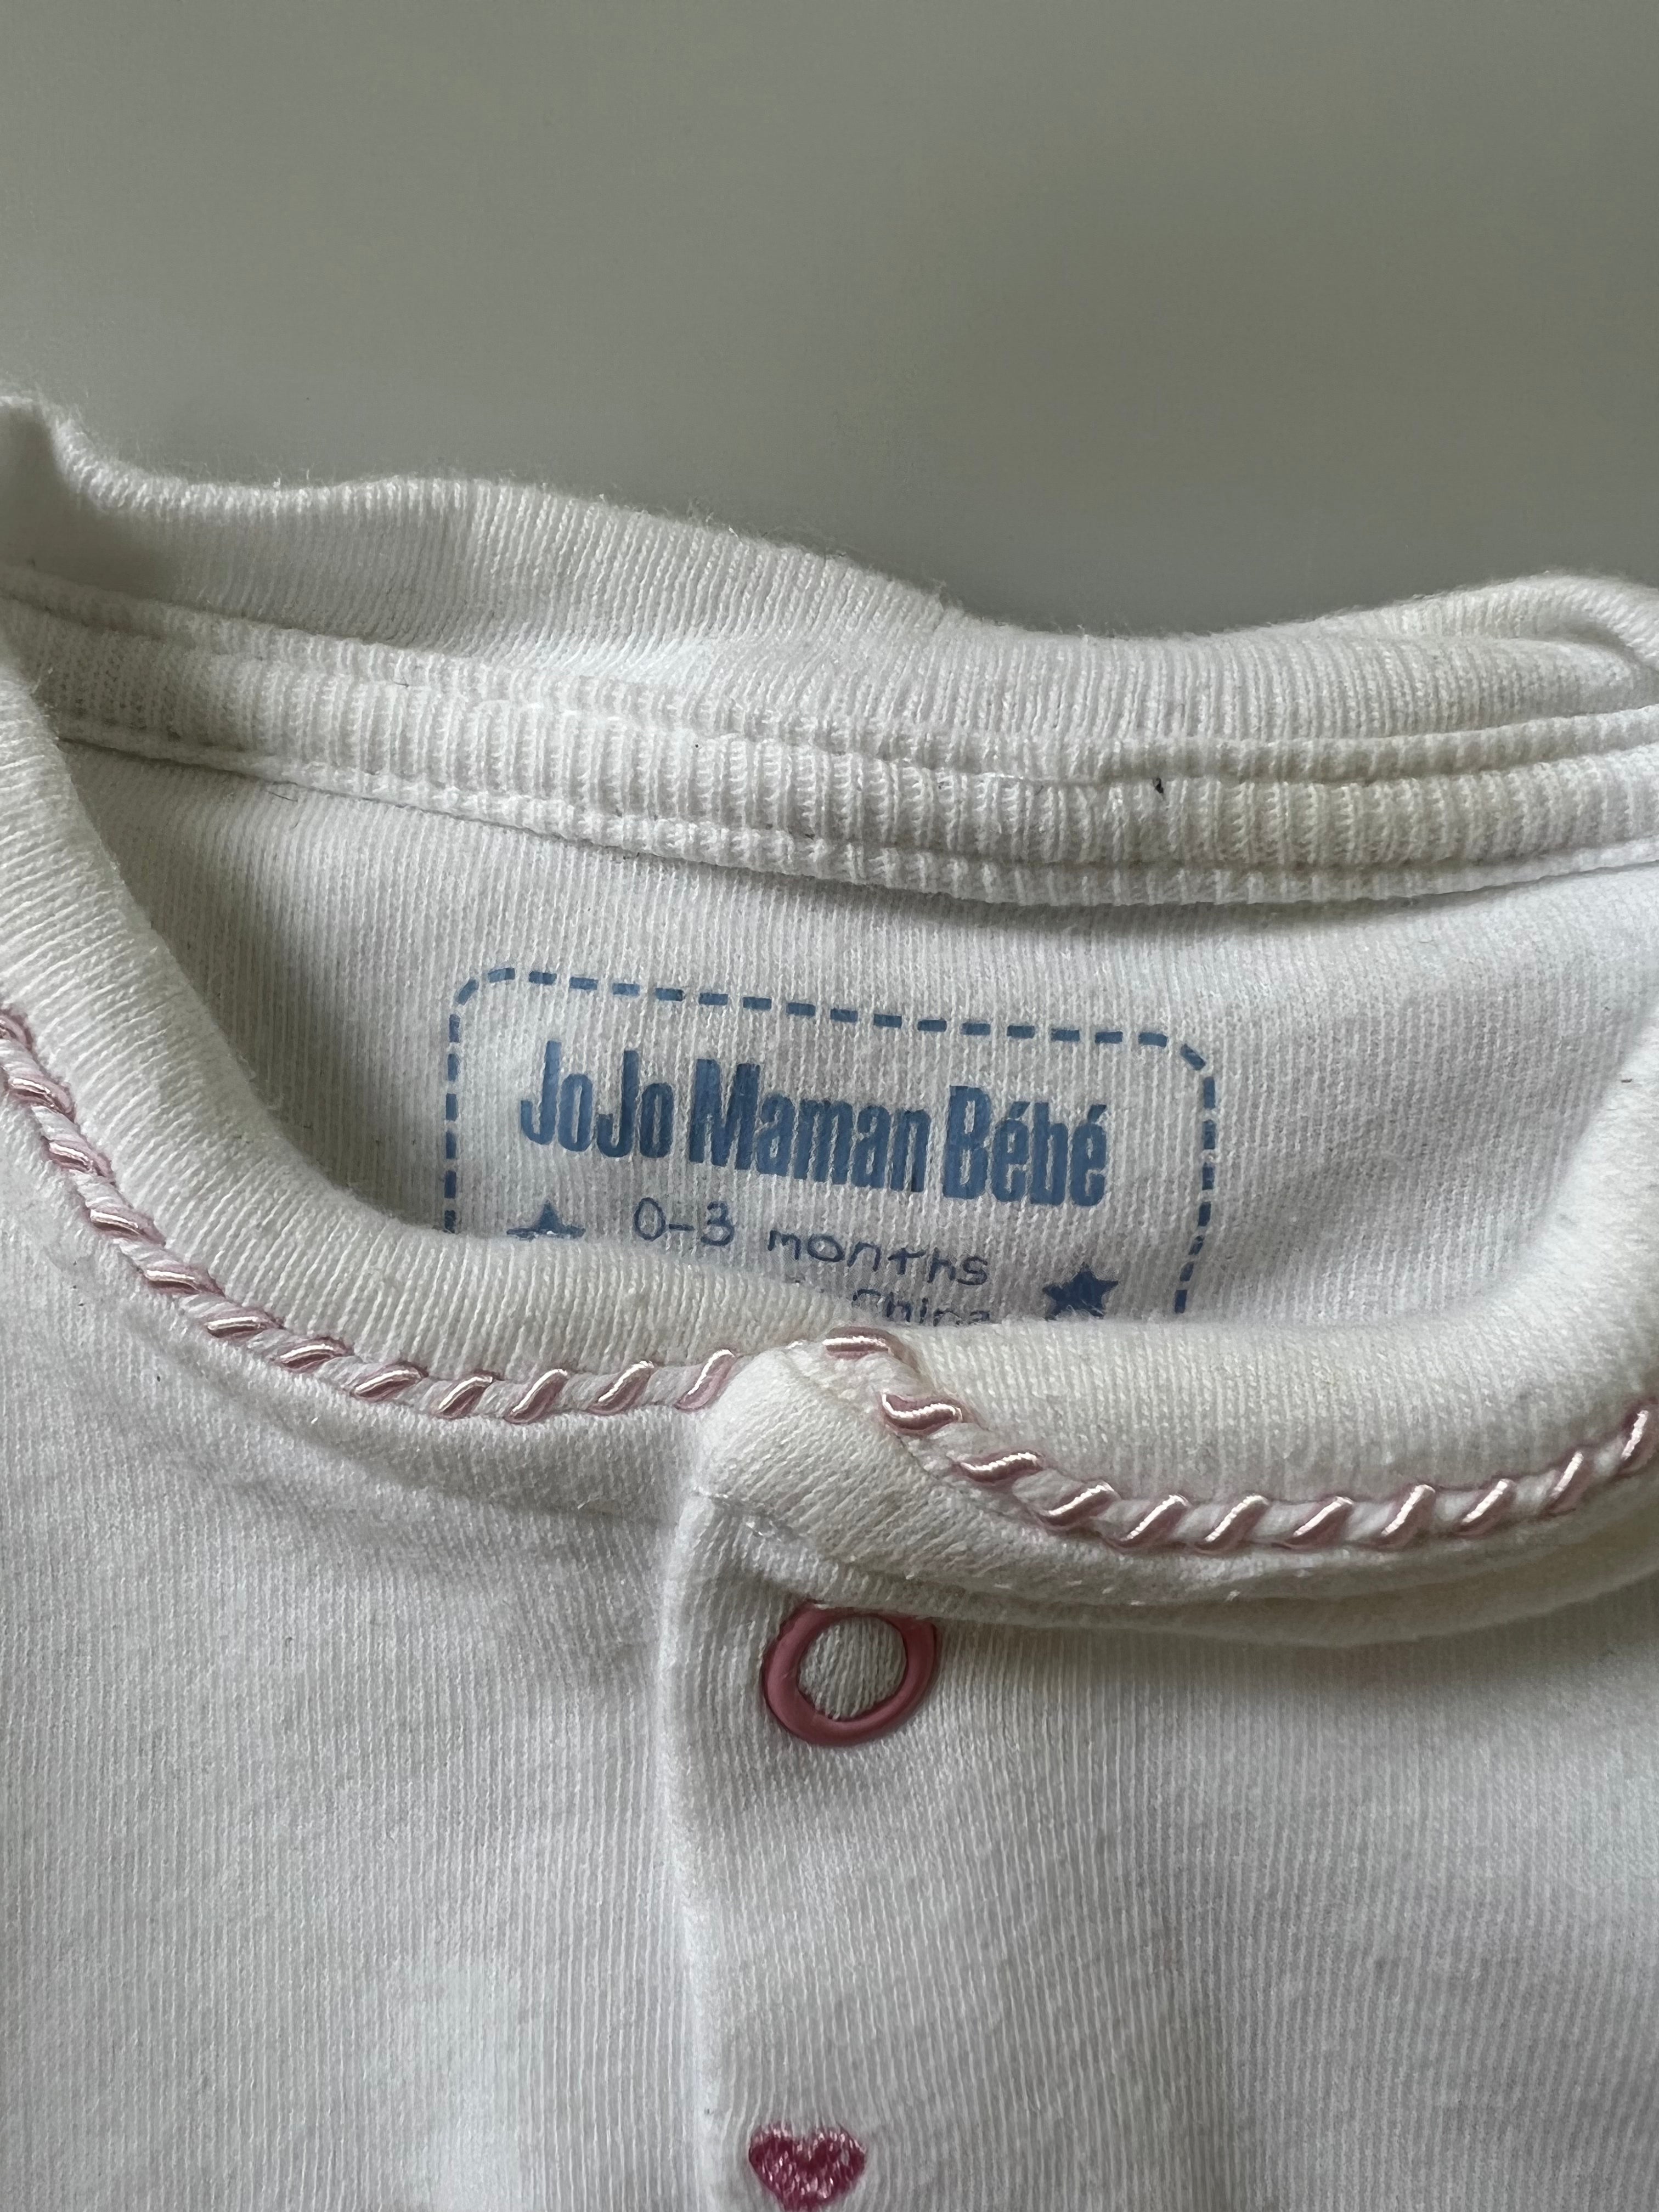 JoJo Maman Bebe Embroidered Hearts Sleepsuit 0-3 Months